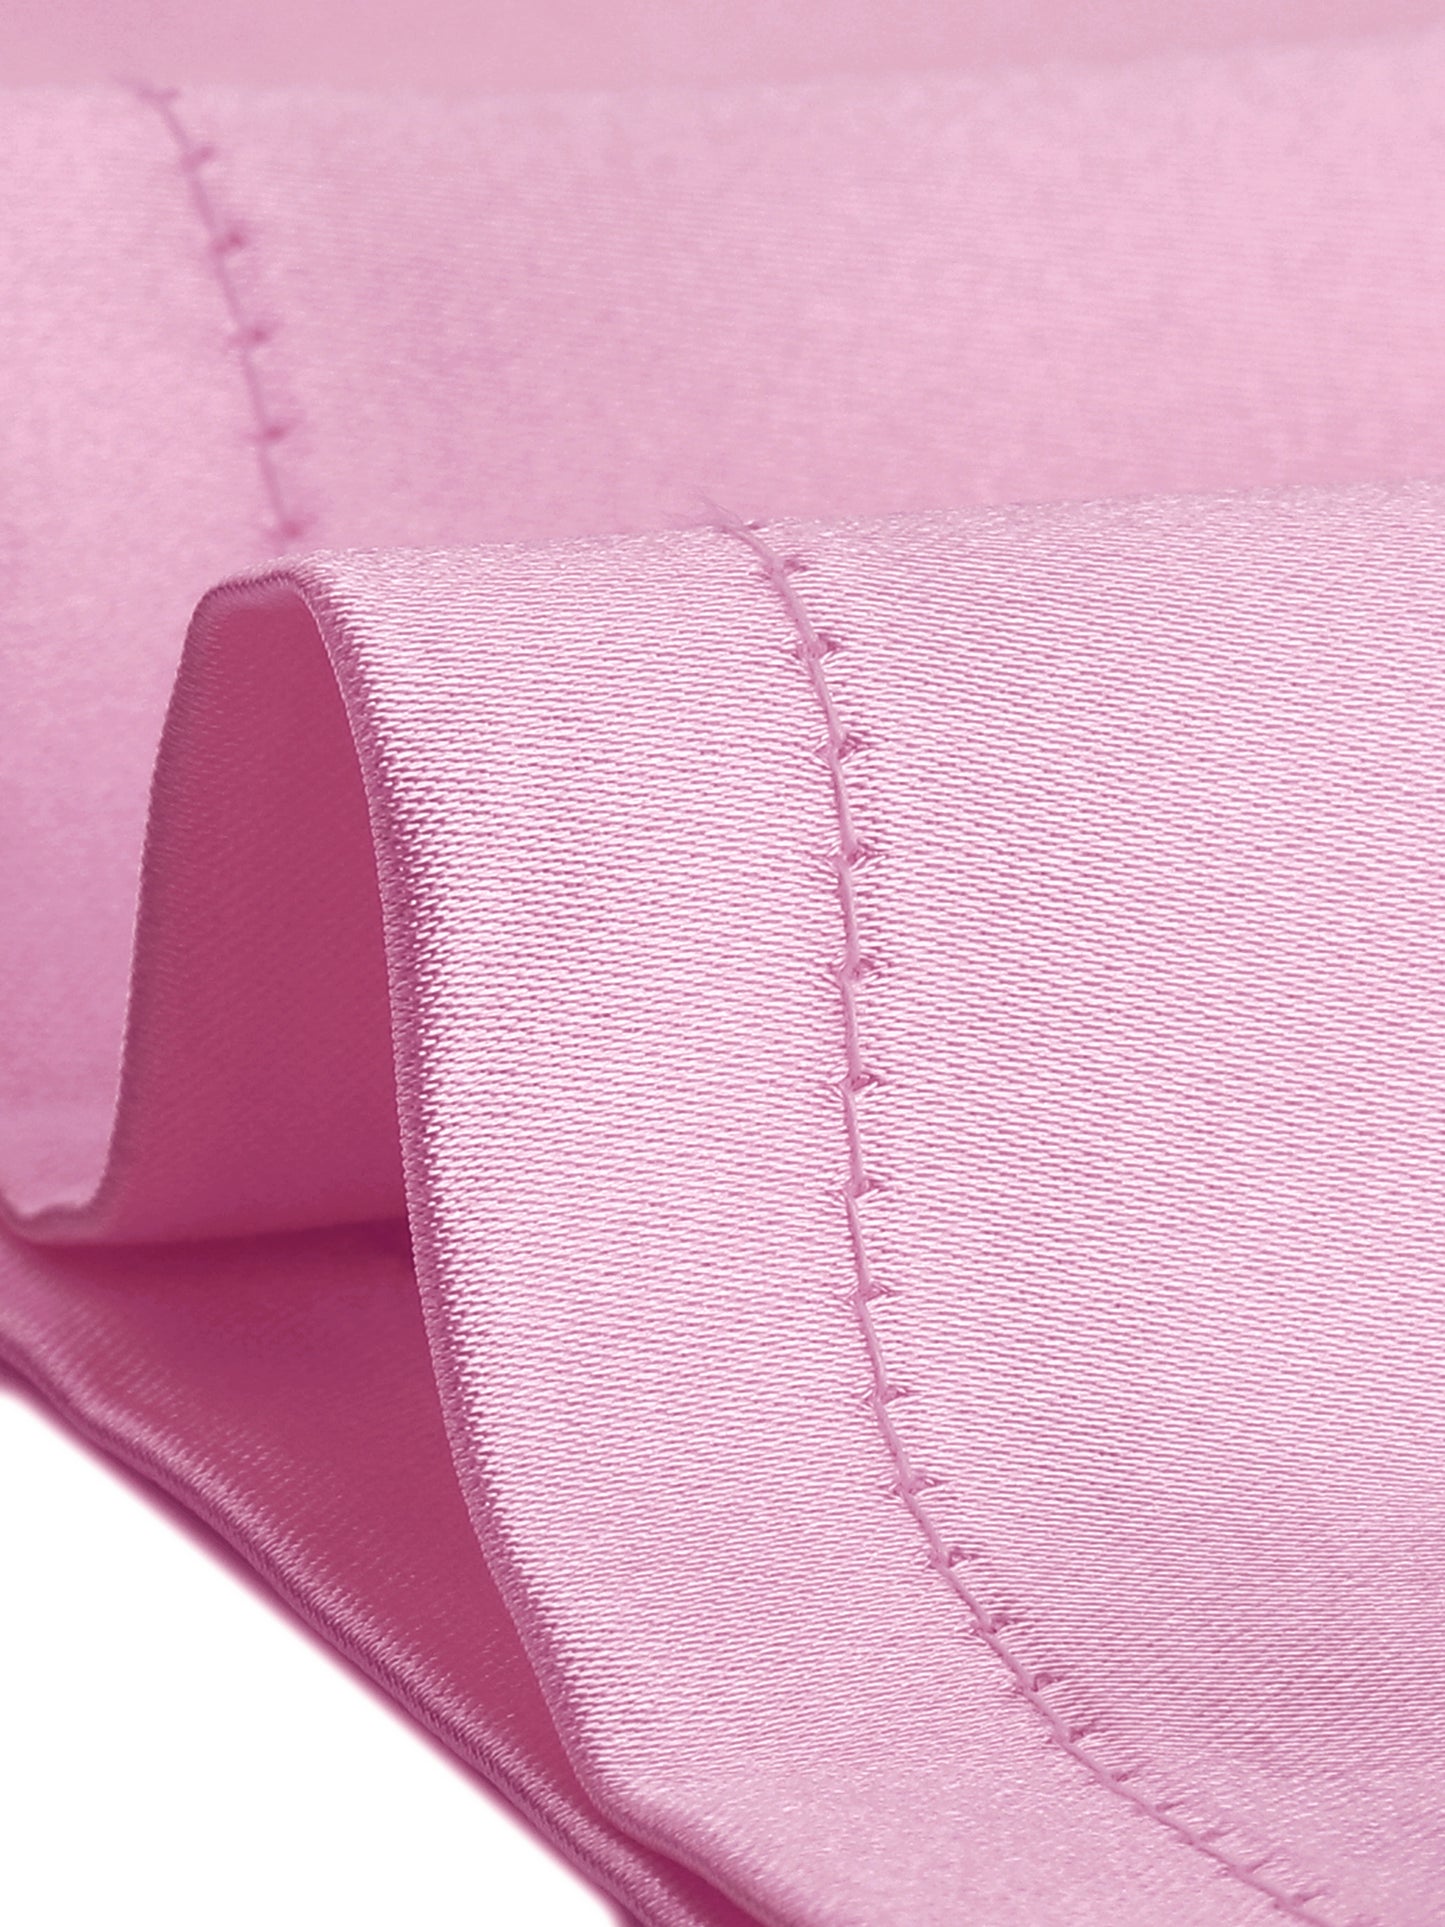 cheibear Pajama Loungewear Short Sleeves Button Down Satin Pj Sets Light Pink